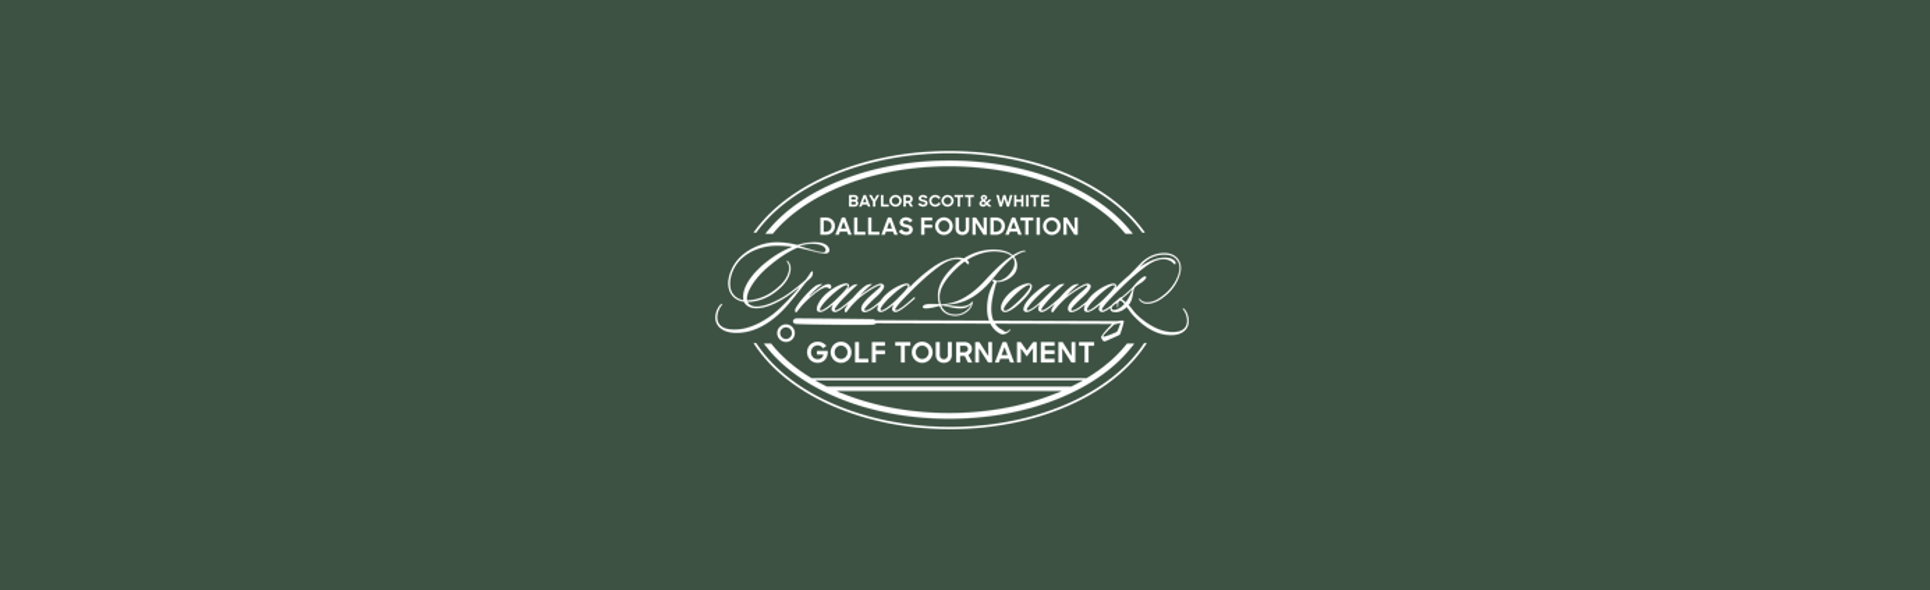 Baylor Scott & White Dallas Foundation Grand Rounds Golf Tournament Logo